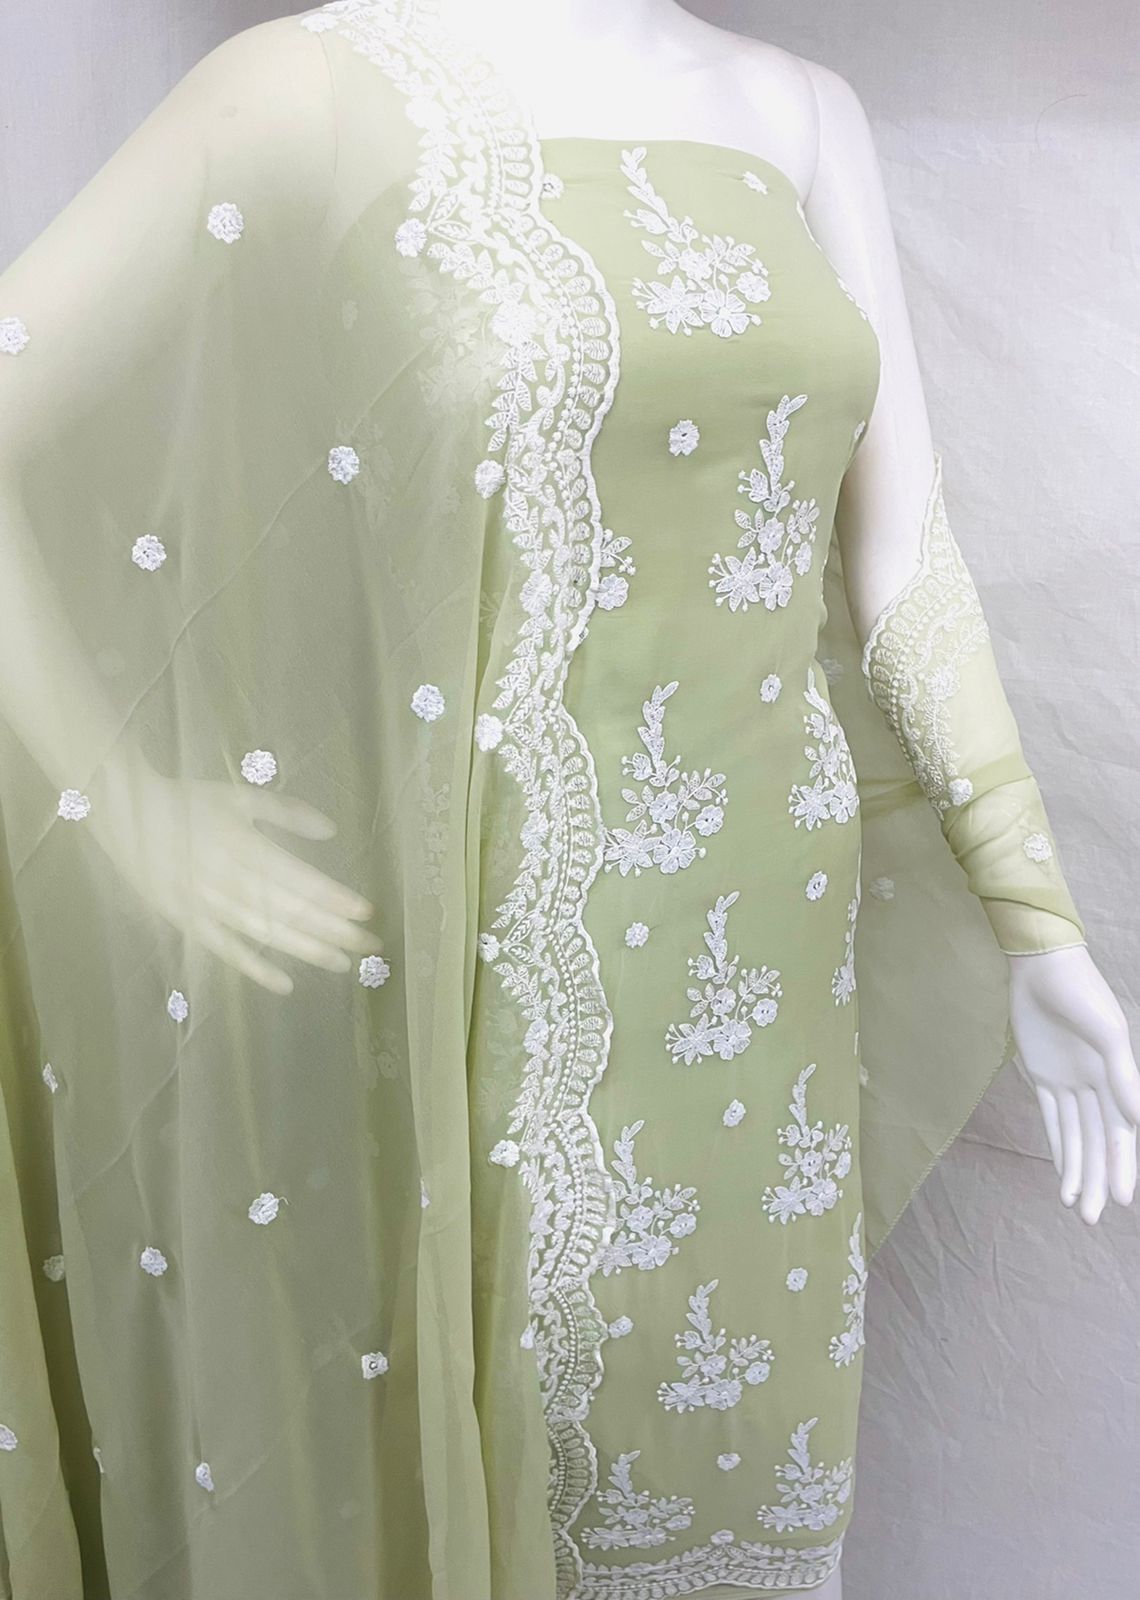 Georgette Cotton  Dress Material Suit For Women